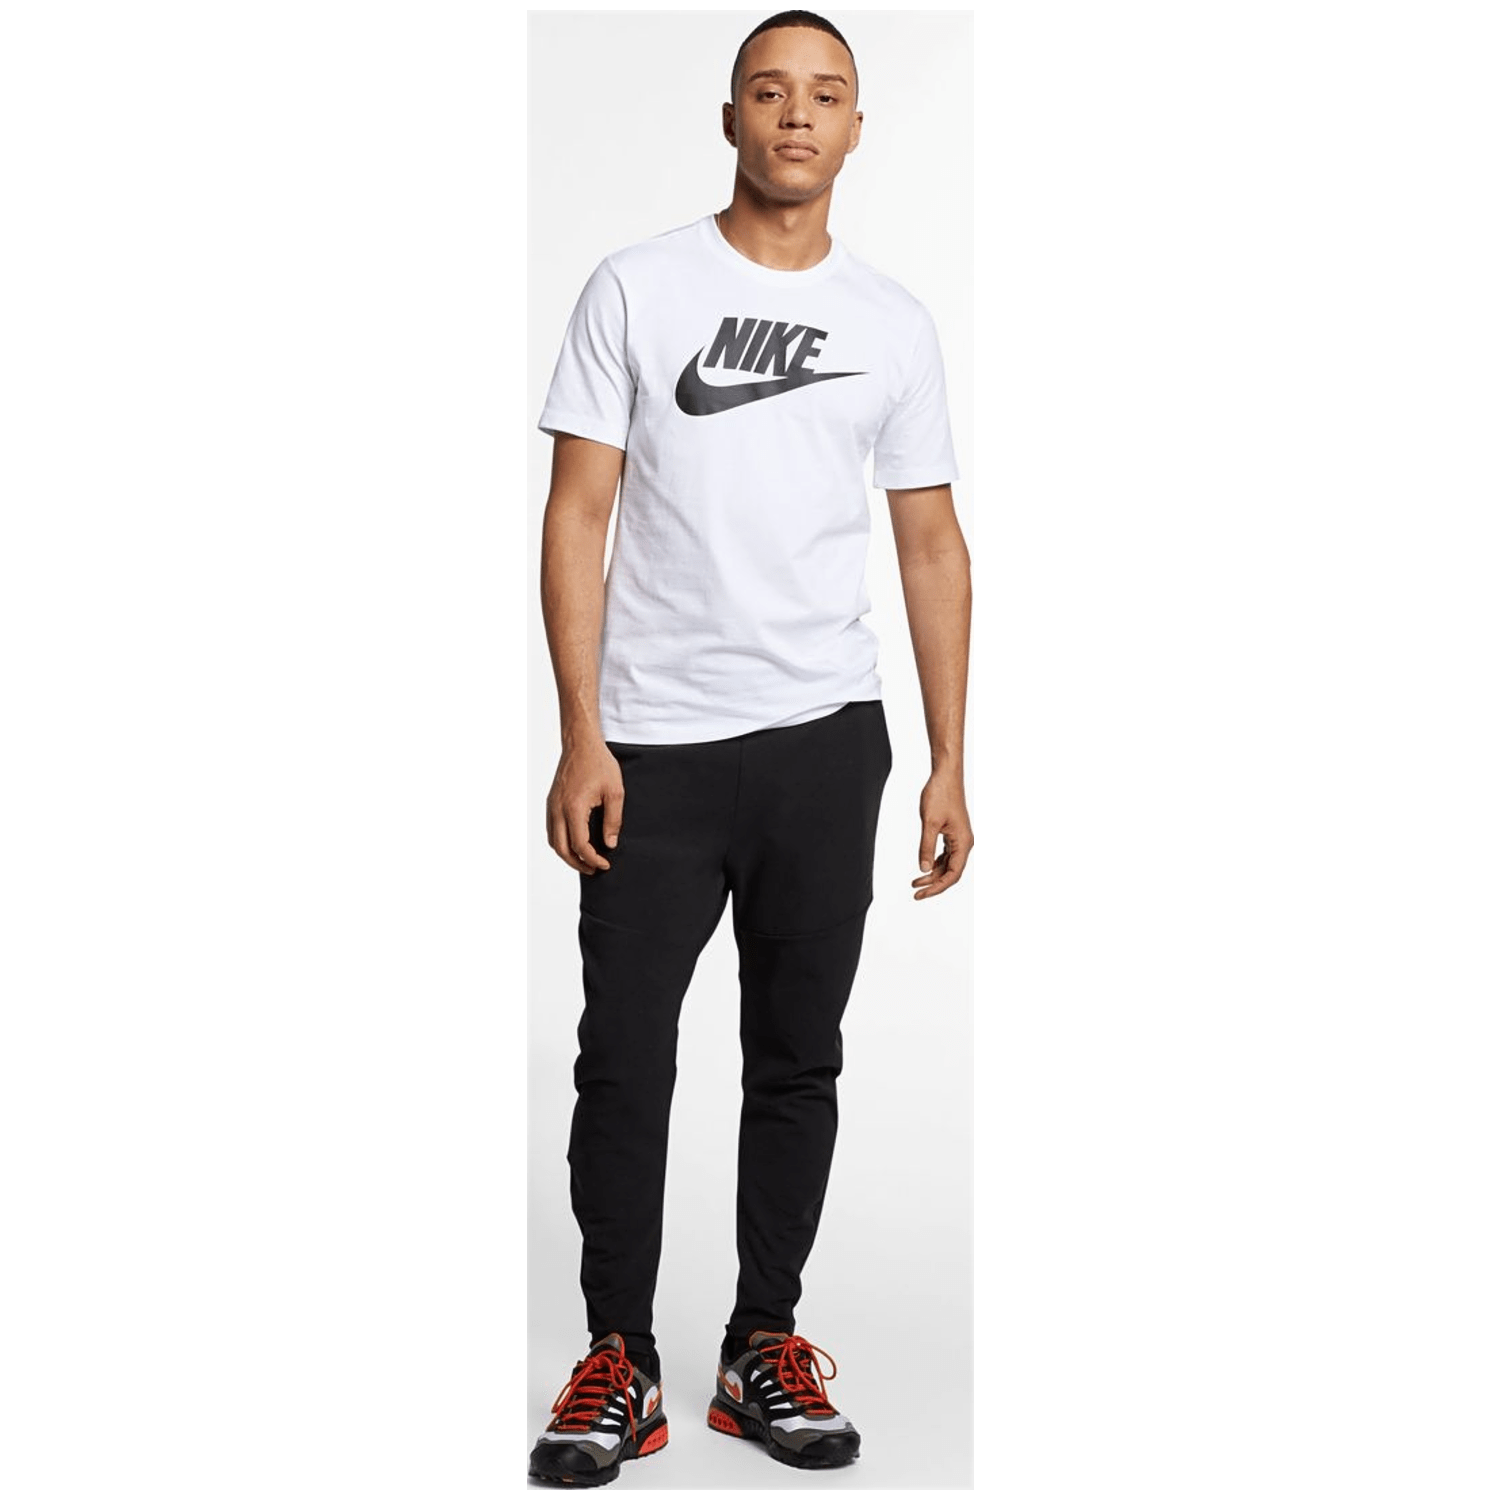 Nike Sportswear Herren T-Shirt